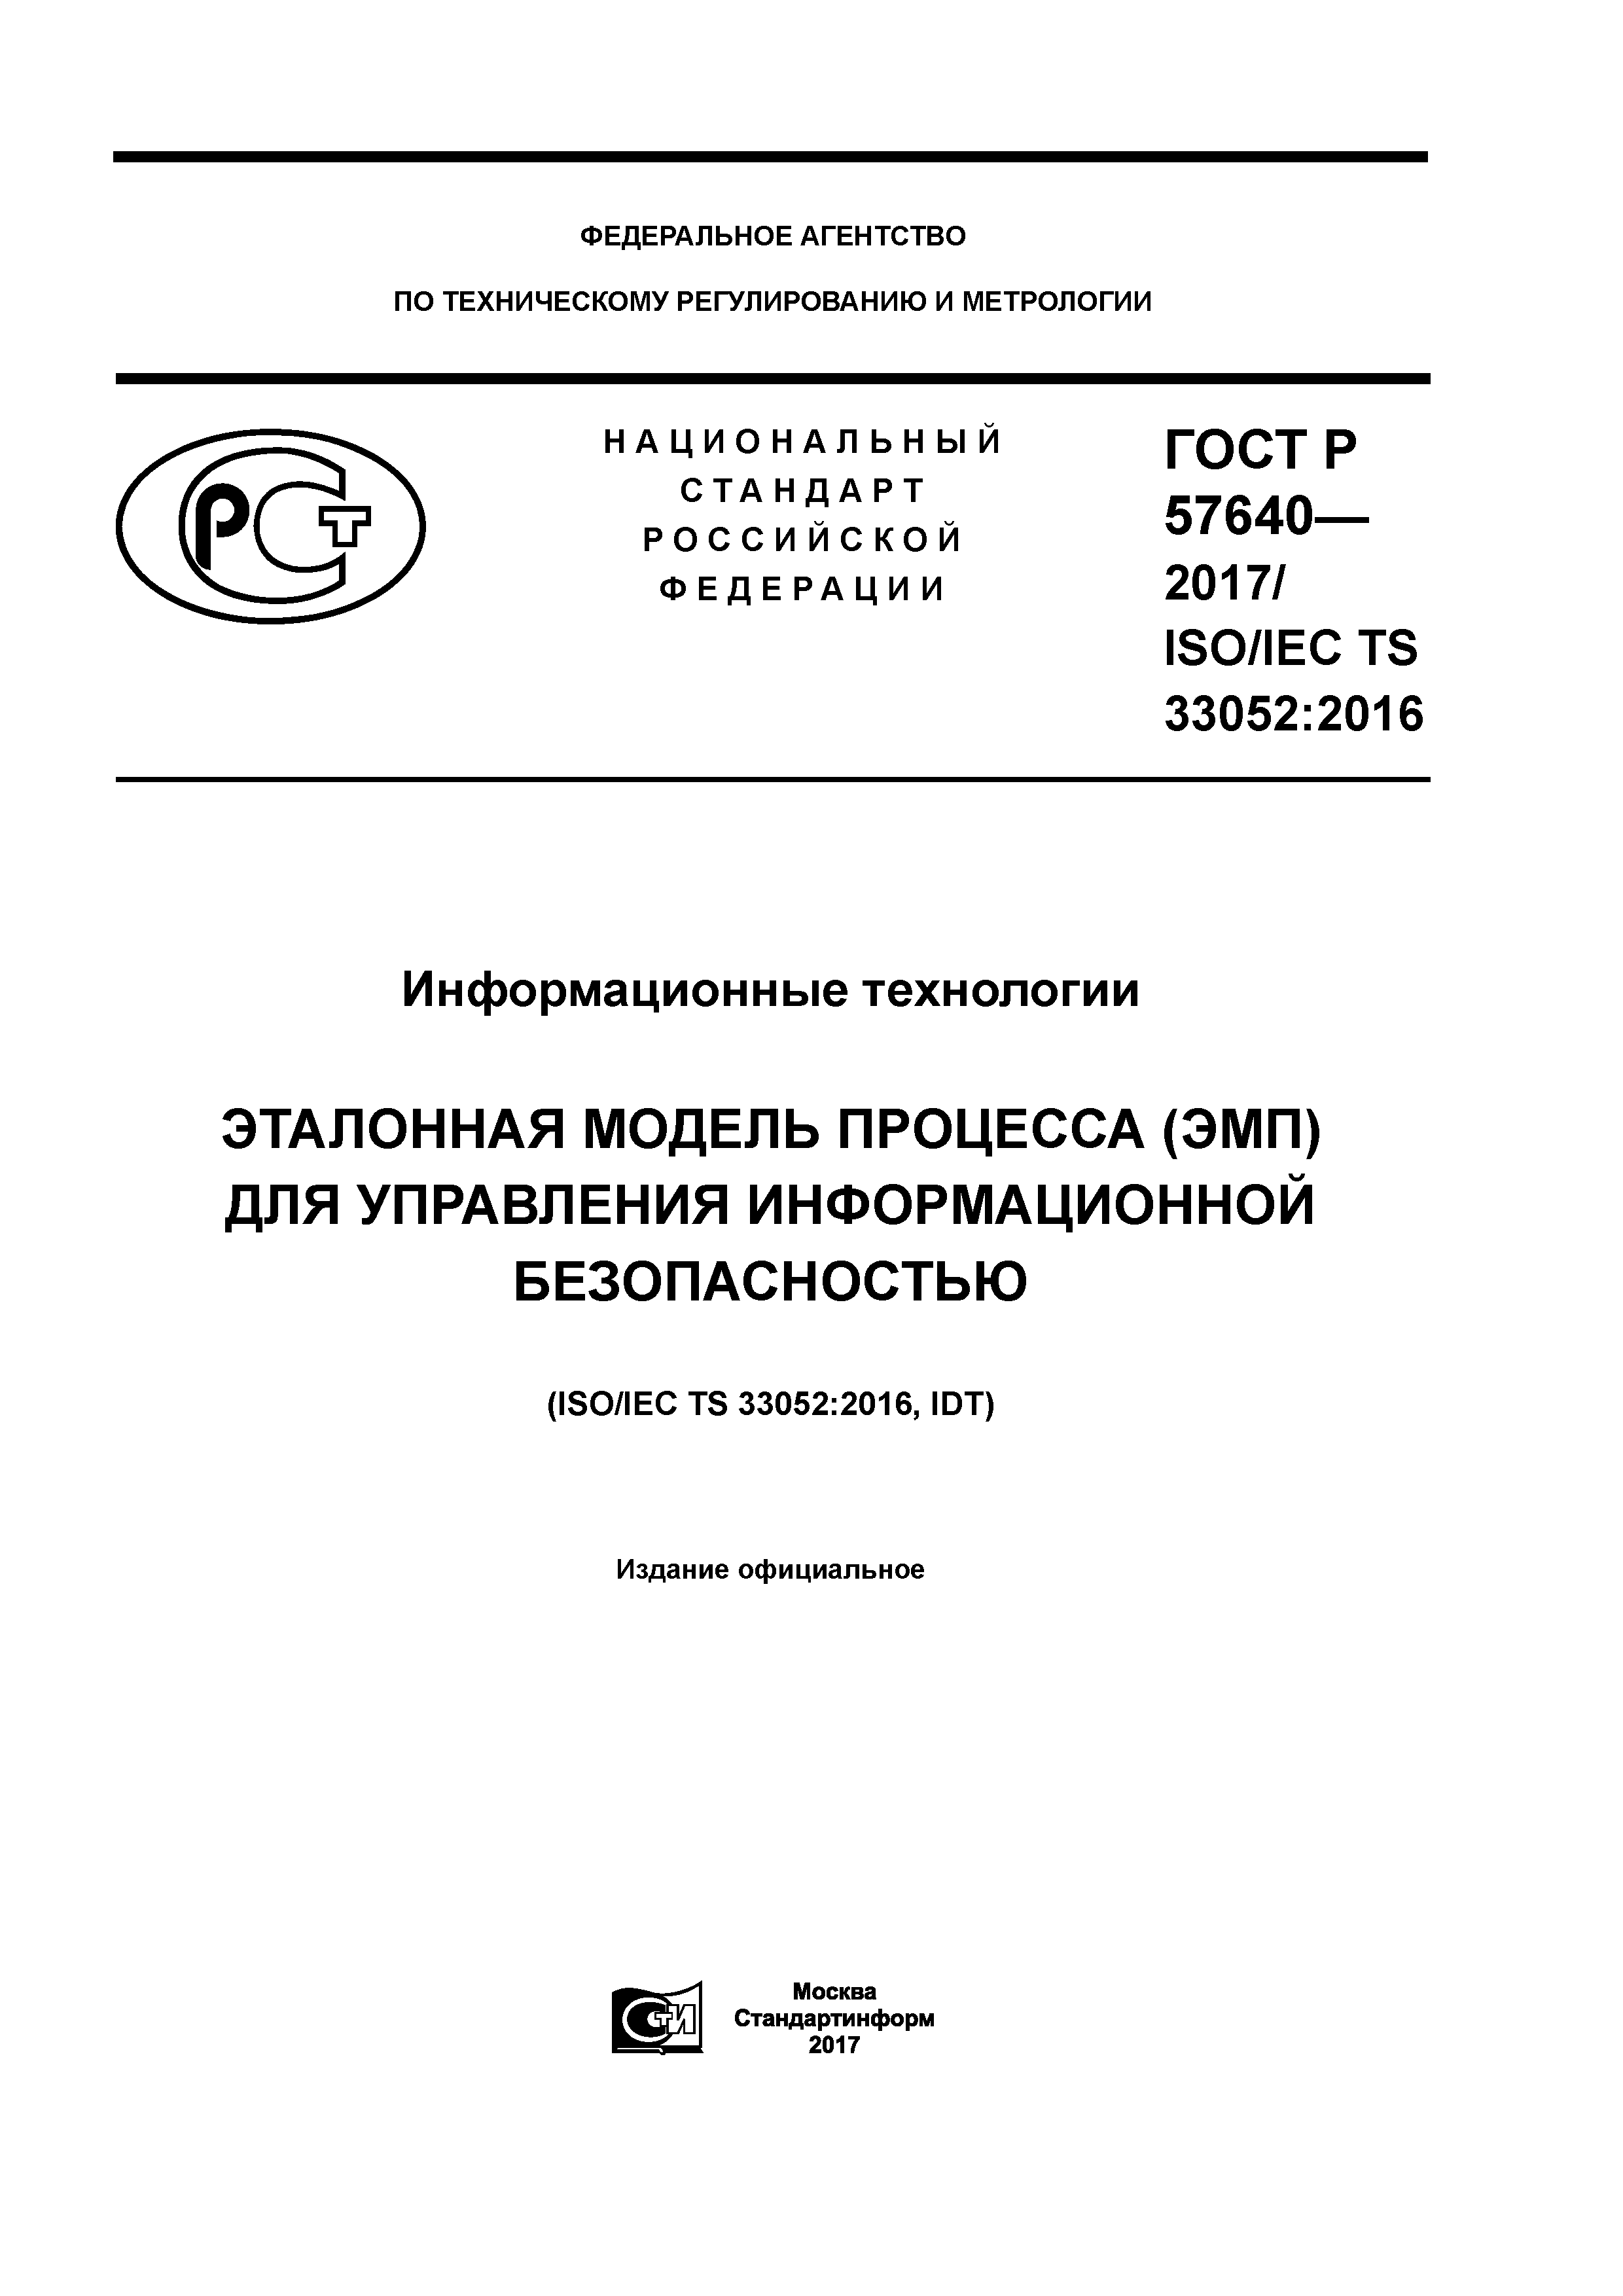 ГОСТ Р 57640-2017